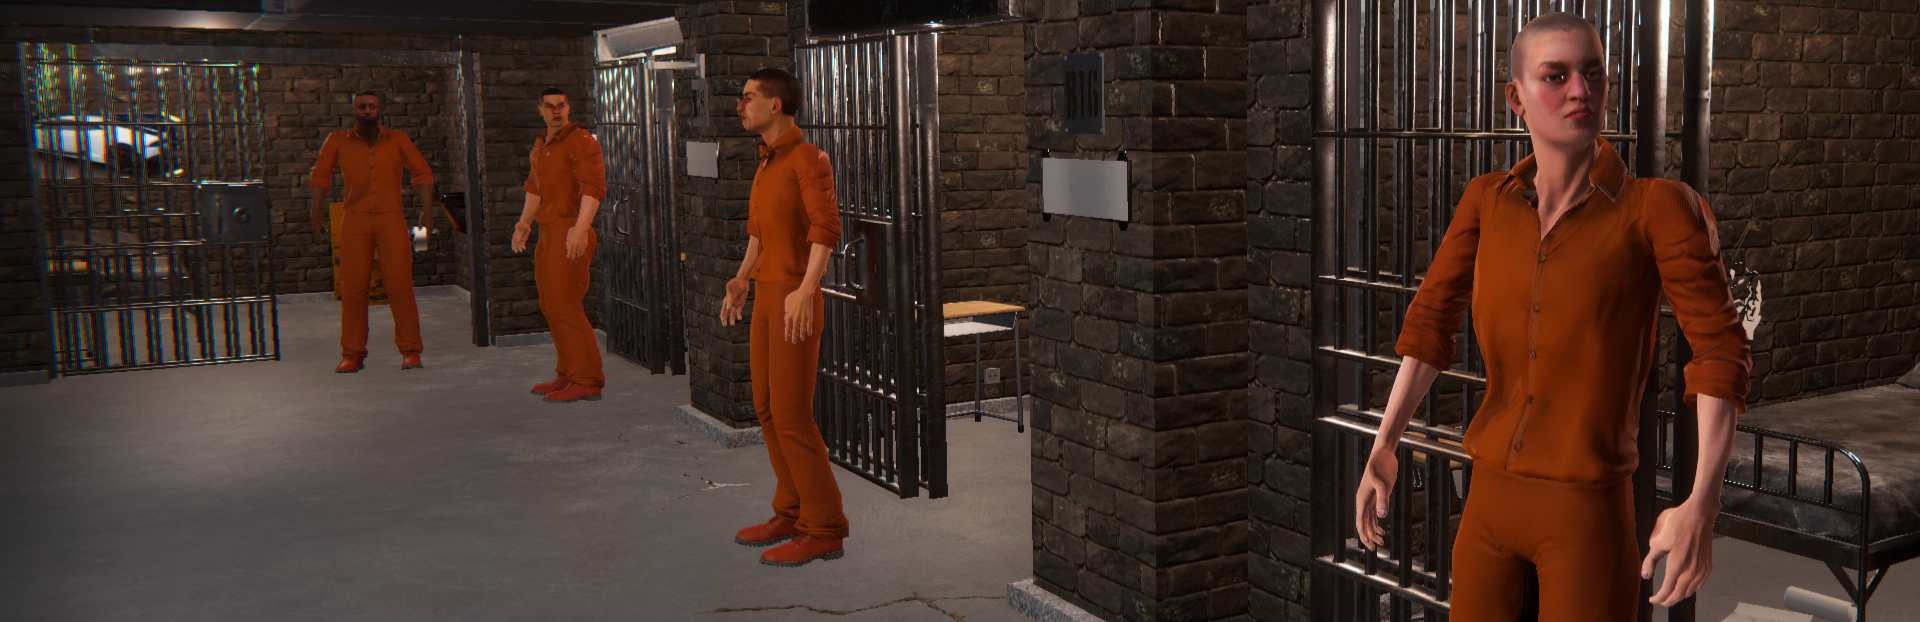 Prison Break: Jail Escape Simulator for Nintendo Switch - Nintendo